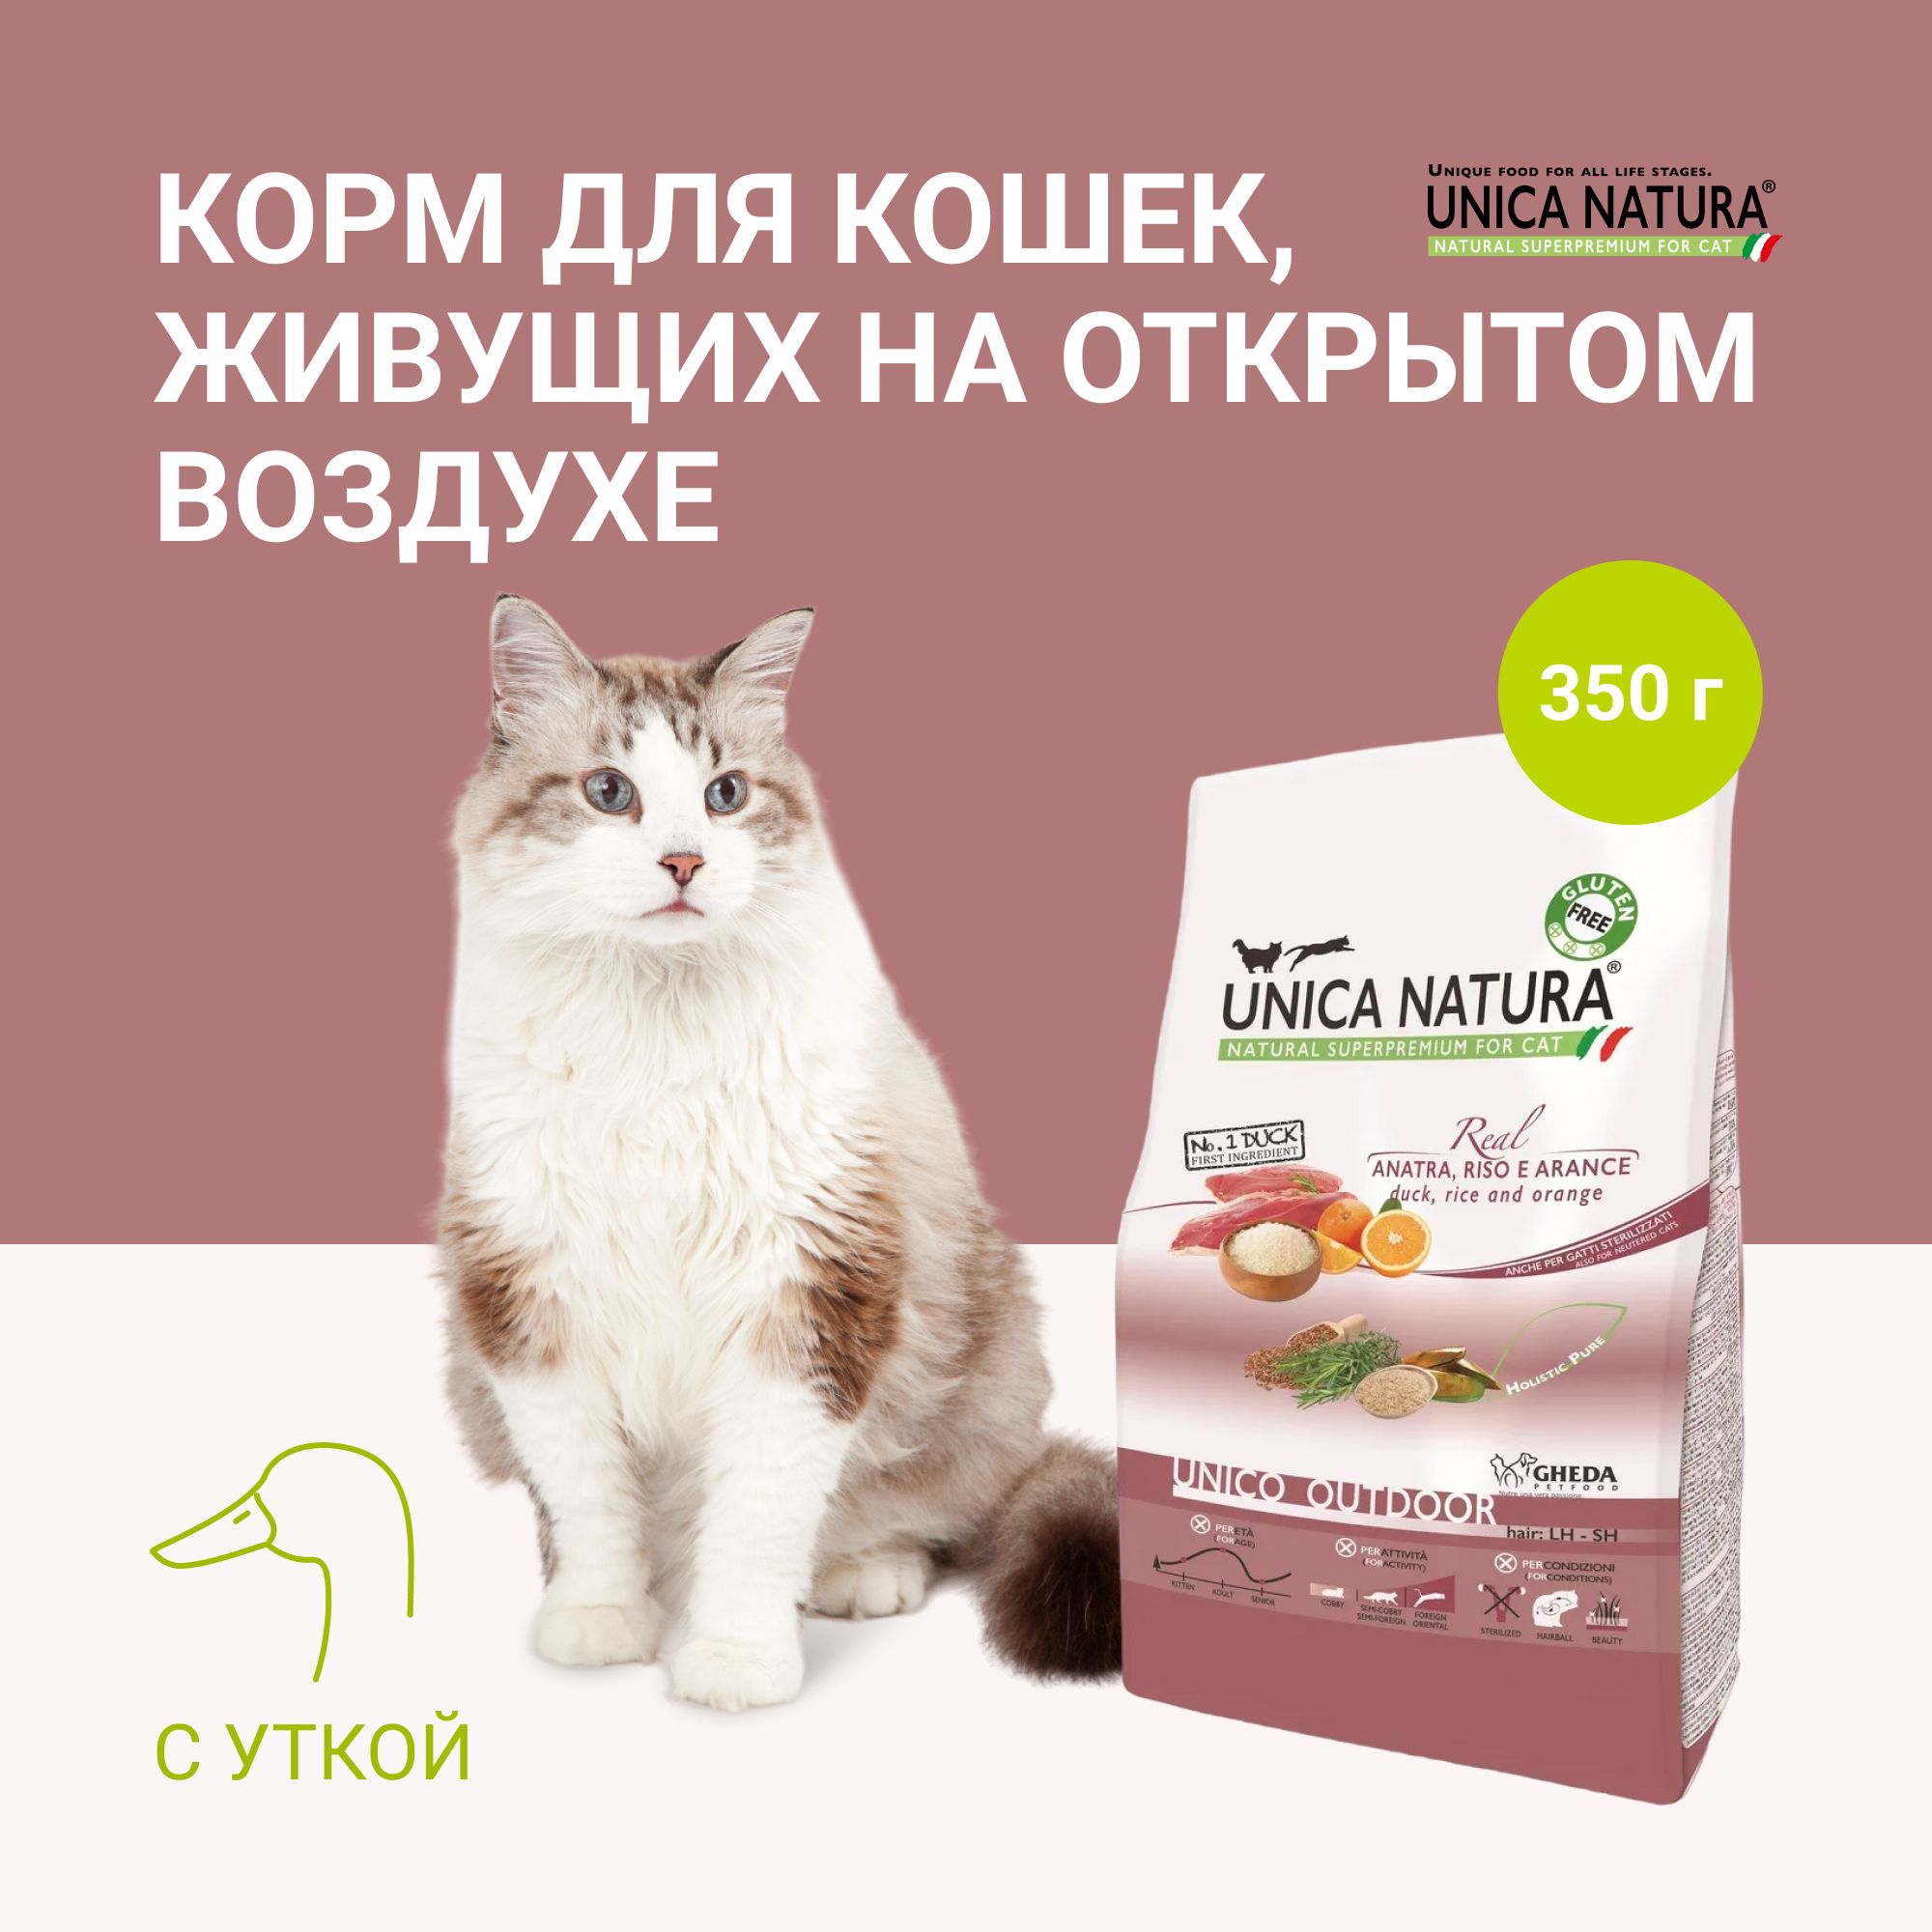 Unica natura для кошек. Unica Natura корм для кошек. Алма натура корм для кошек. Спектрум корм для Уника натура для кошек.